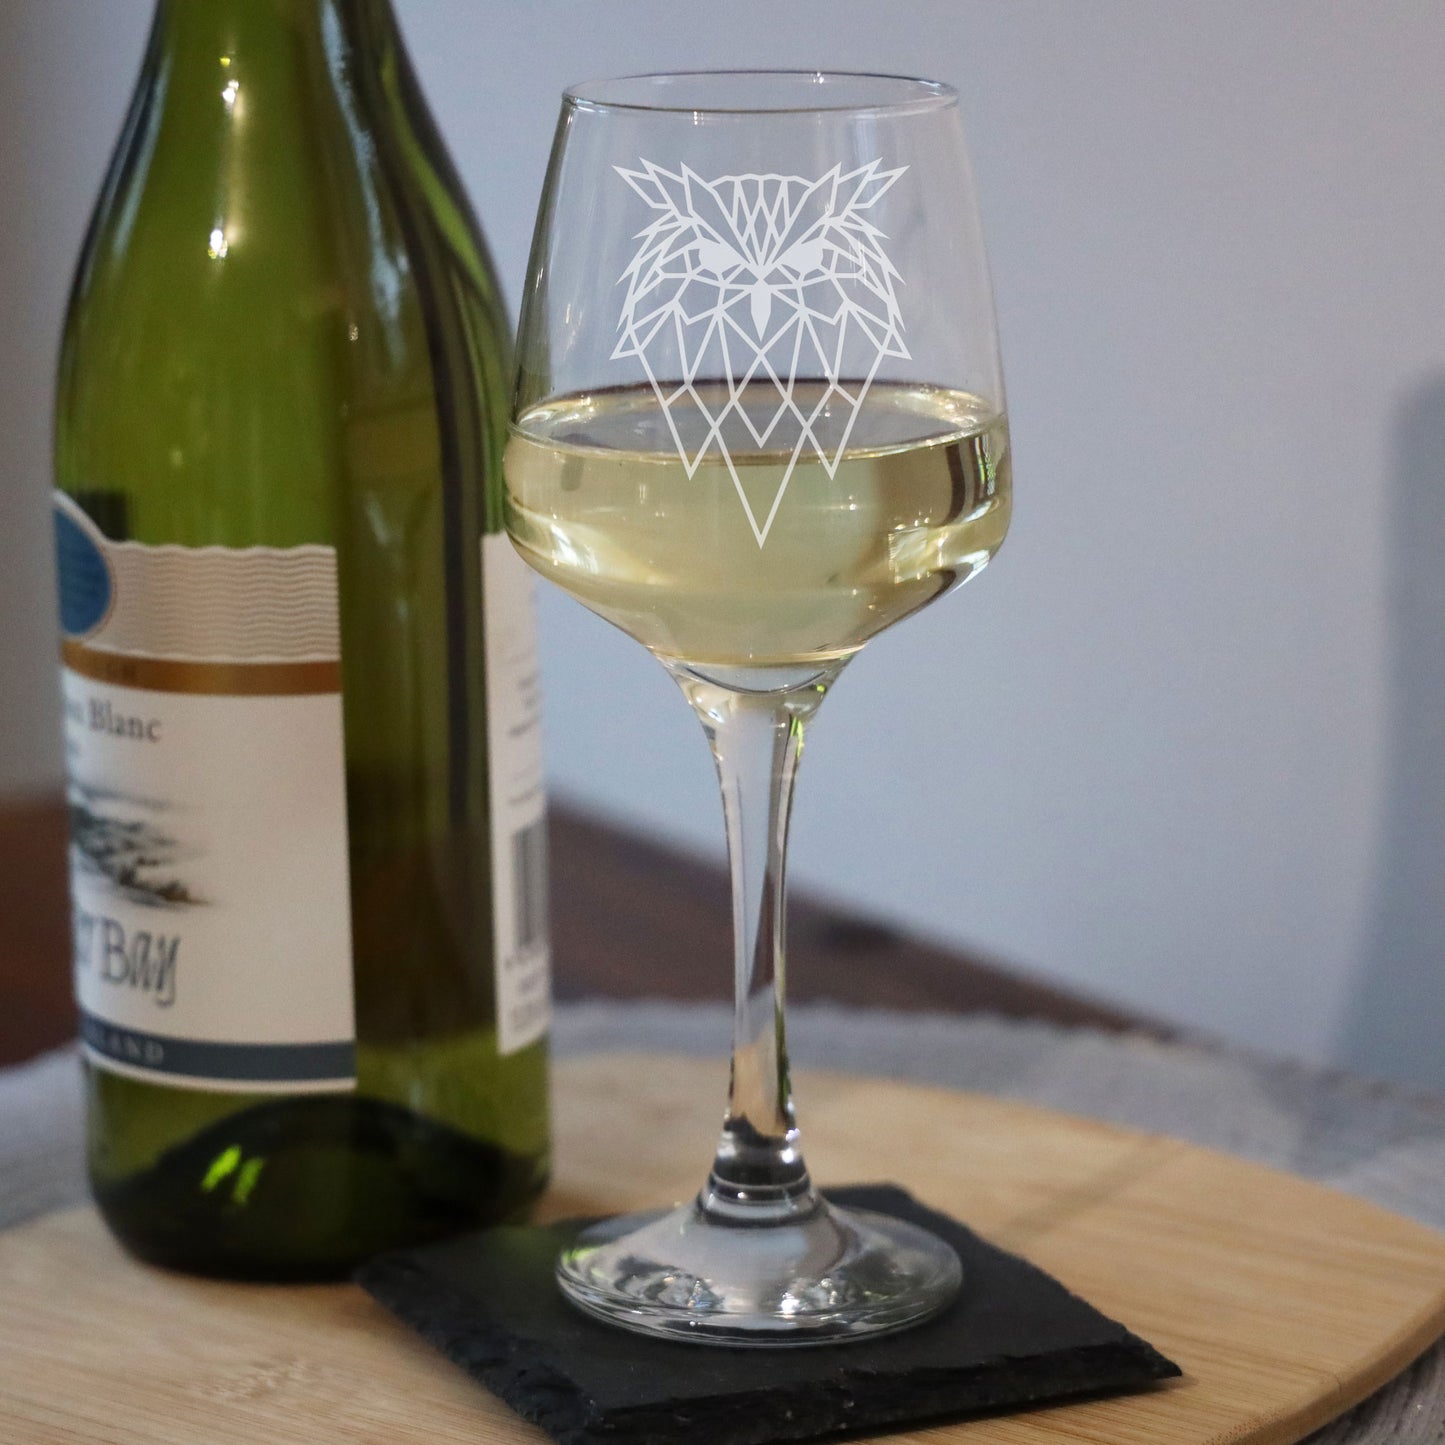 Owl Engraved Wine Glass  - Always Looking Good -   